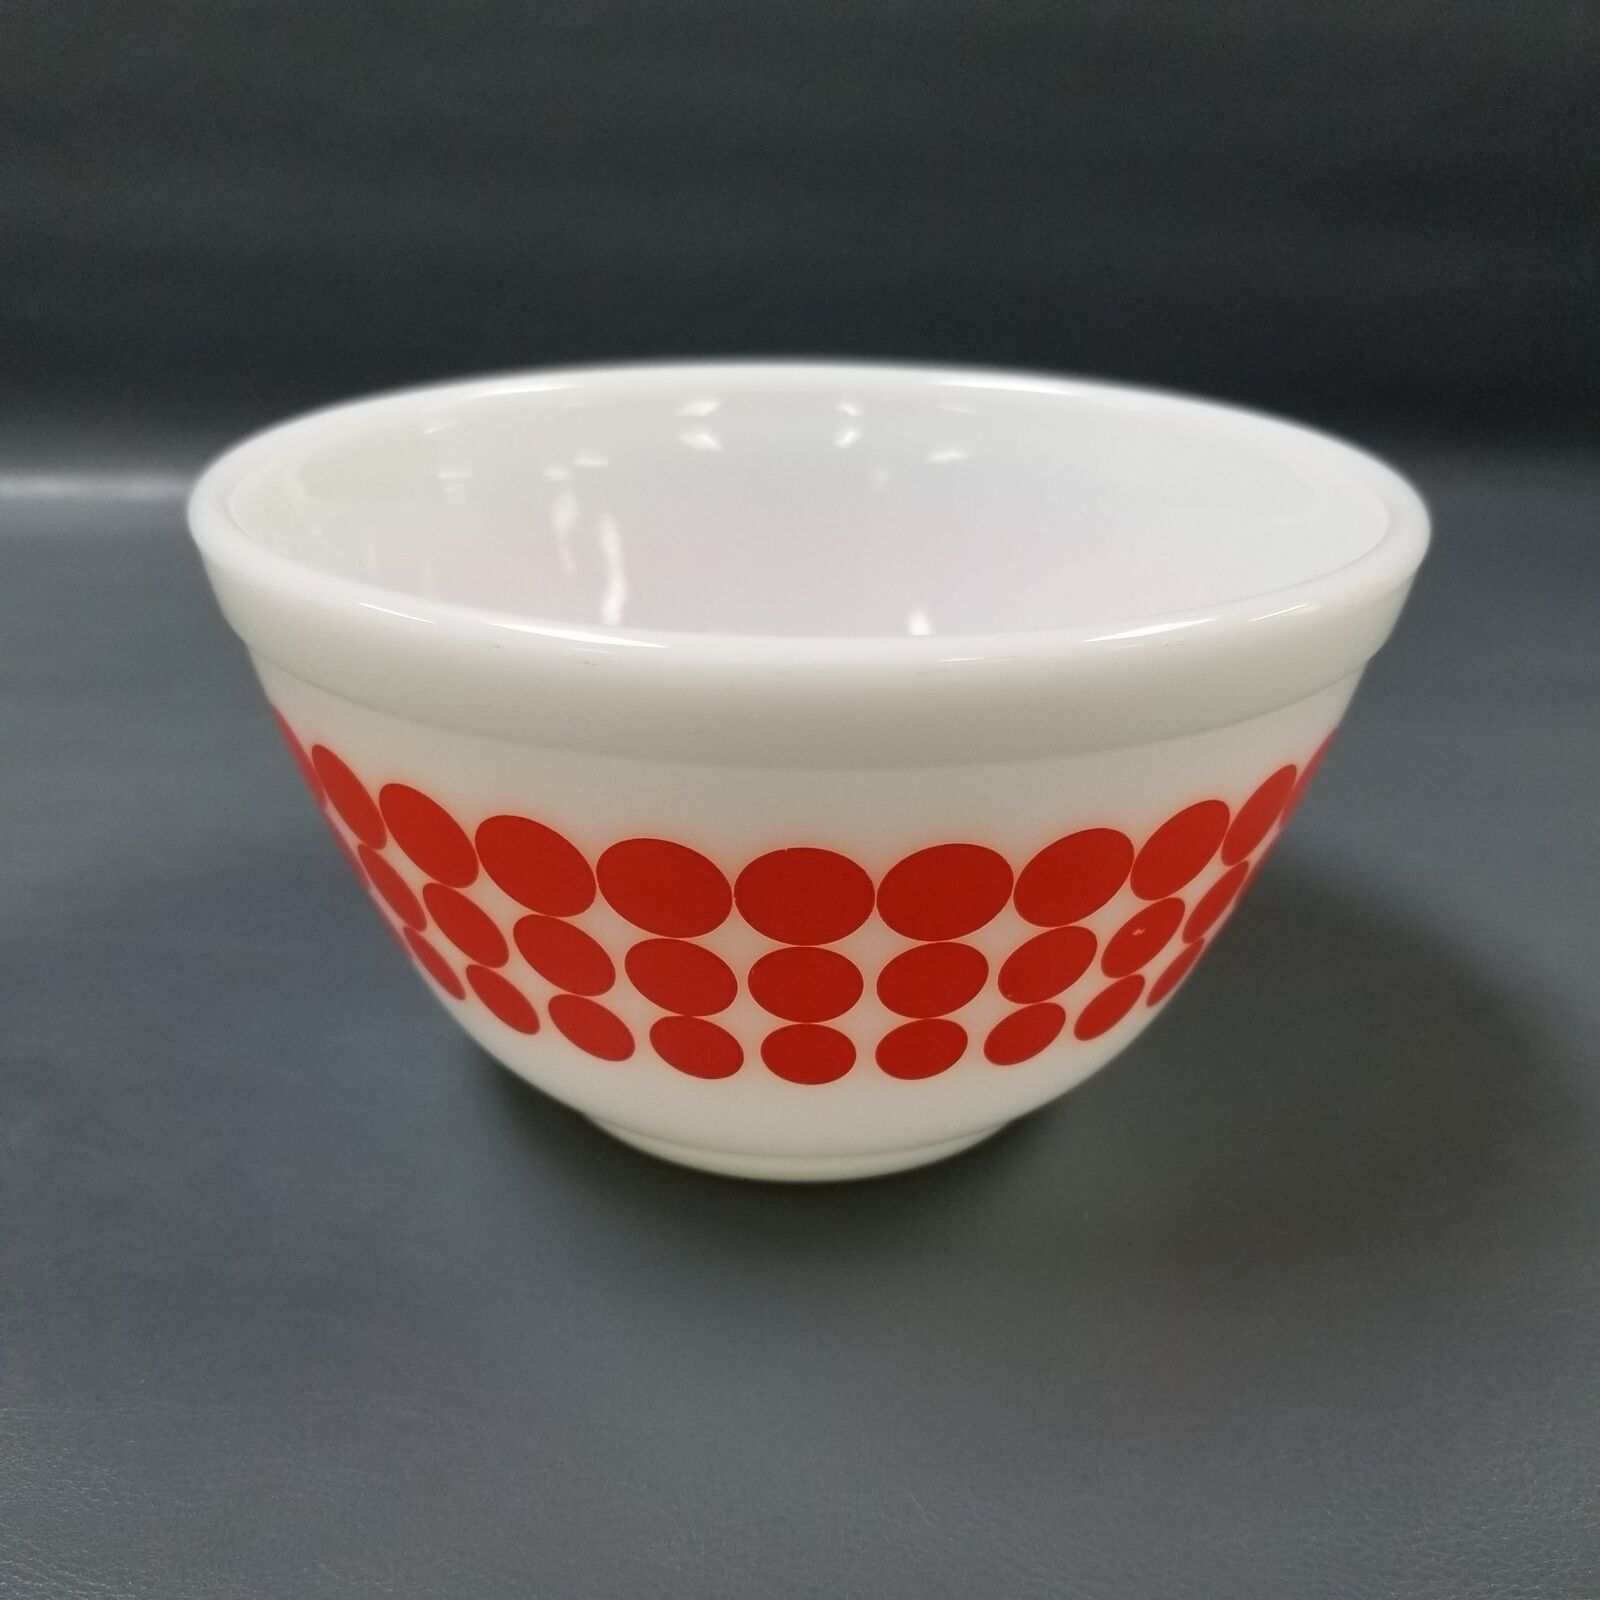 Vintage Pyrex Orange Dot Mixing Bowl #401 - Gorgeous Condition